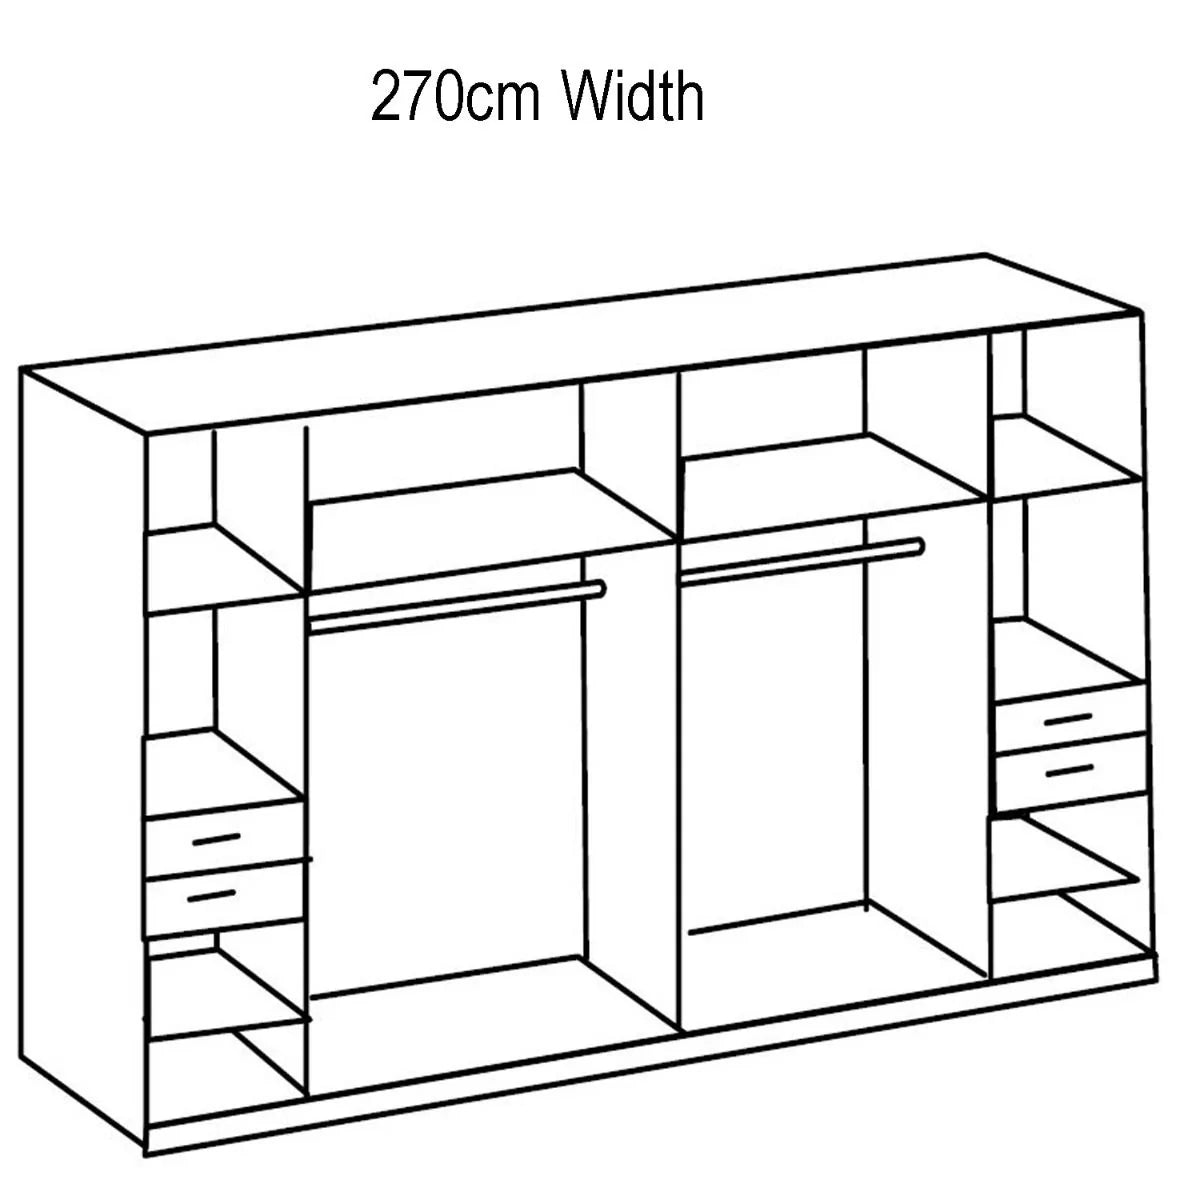 Fenton 6 Doors Wardrobe with 4 Drawers - Graphite